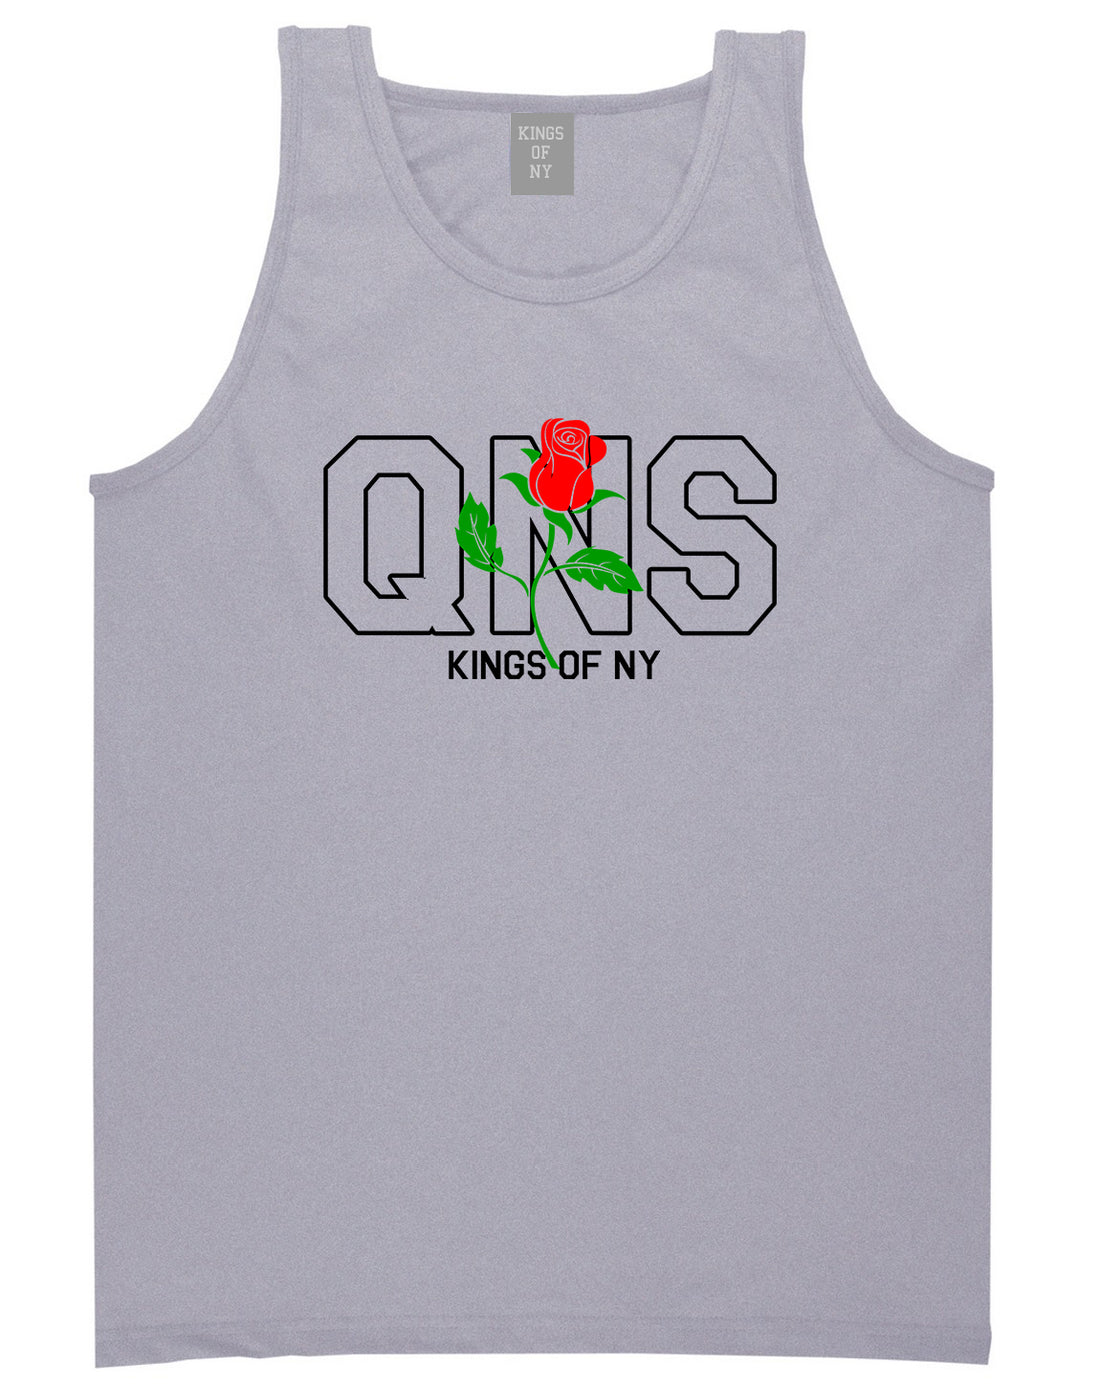 Rose QNS Queens Kings Of NY Mens Tank Top T-Shirt Grey